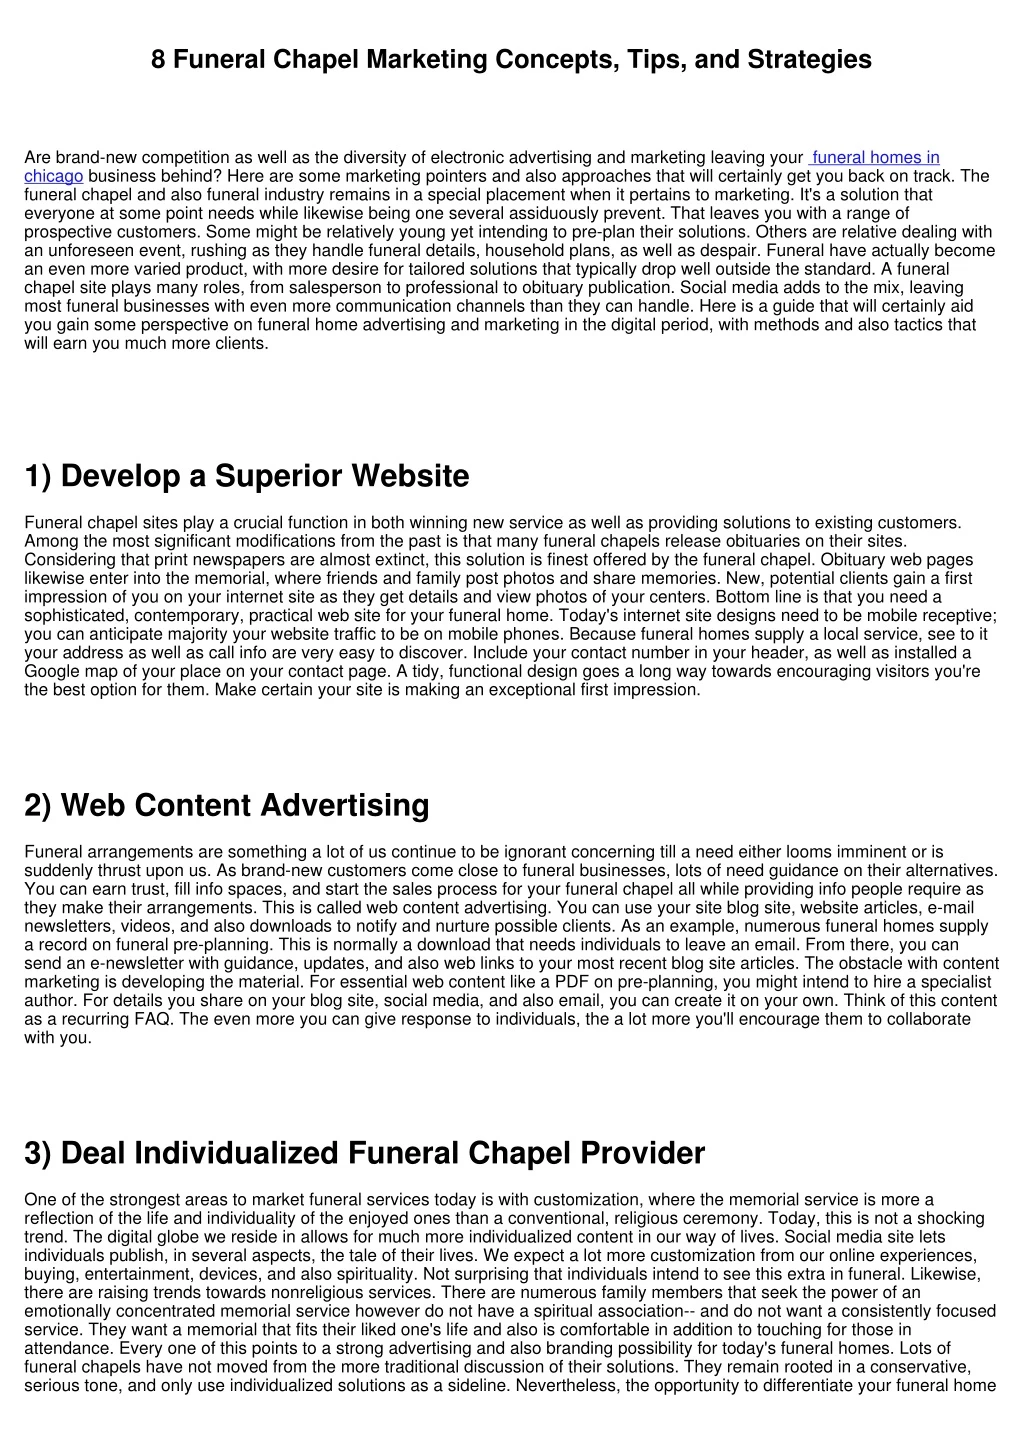 8 funeral chapel marketing concepts tips